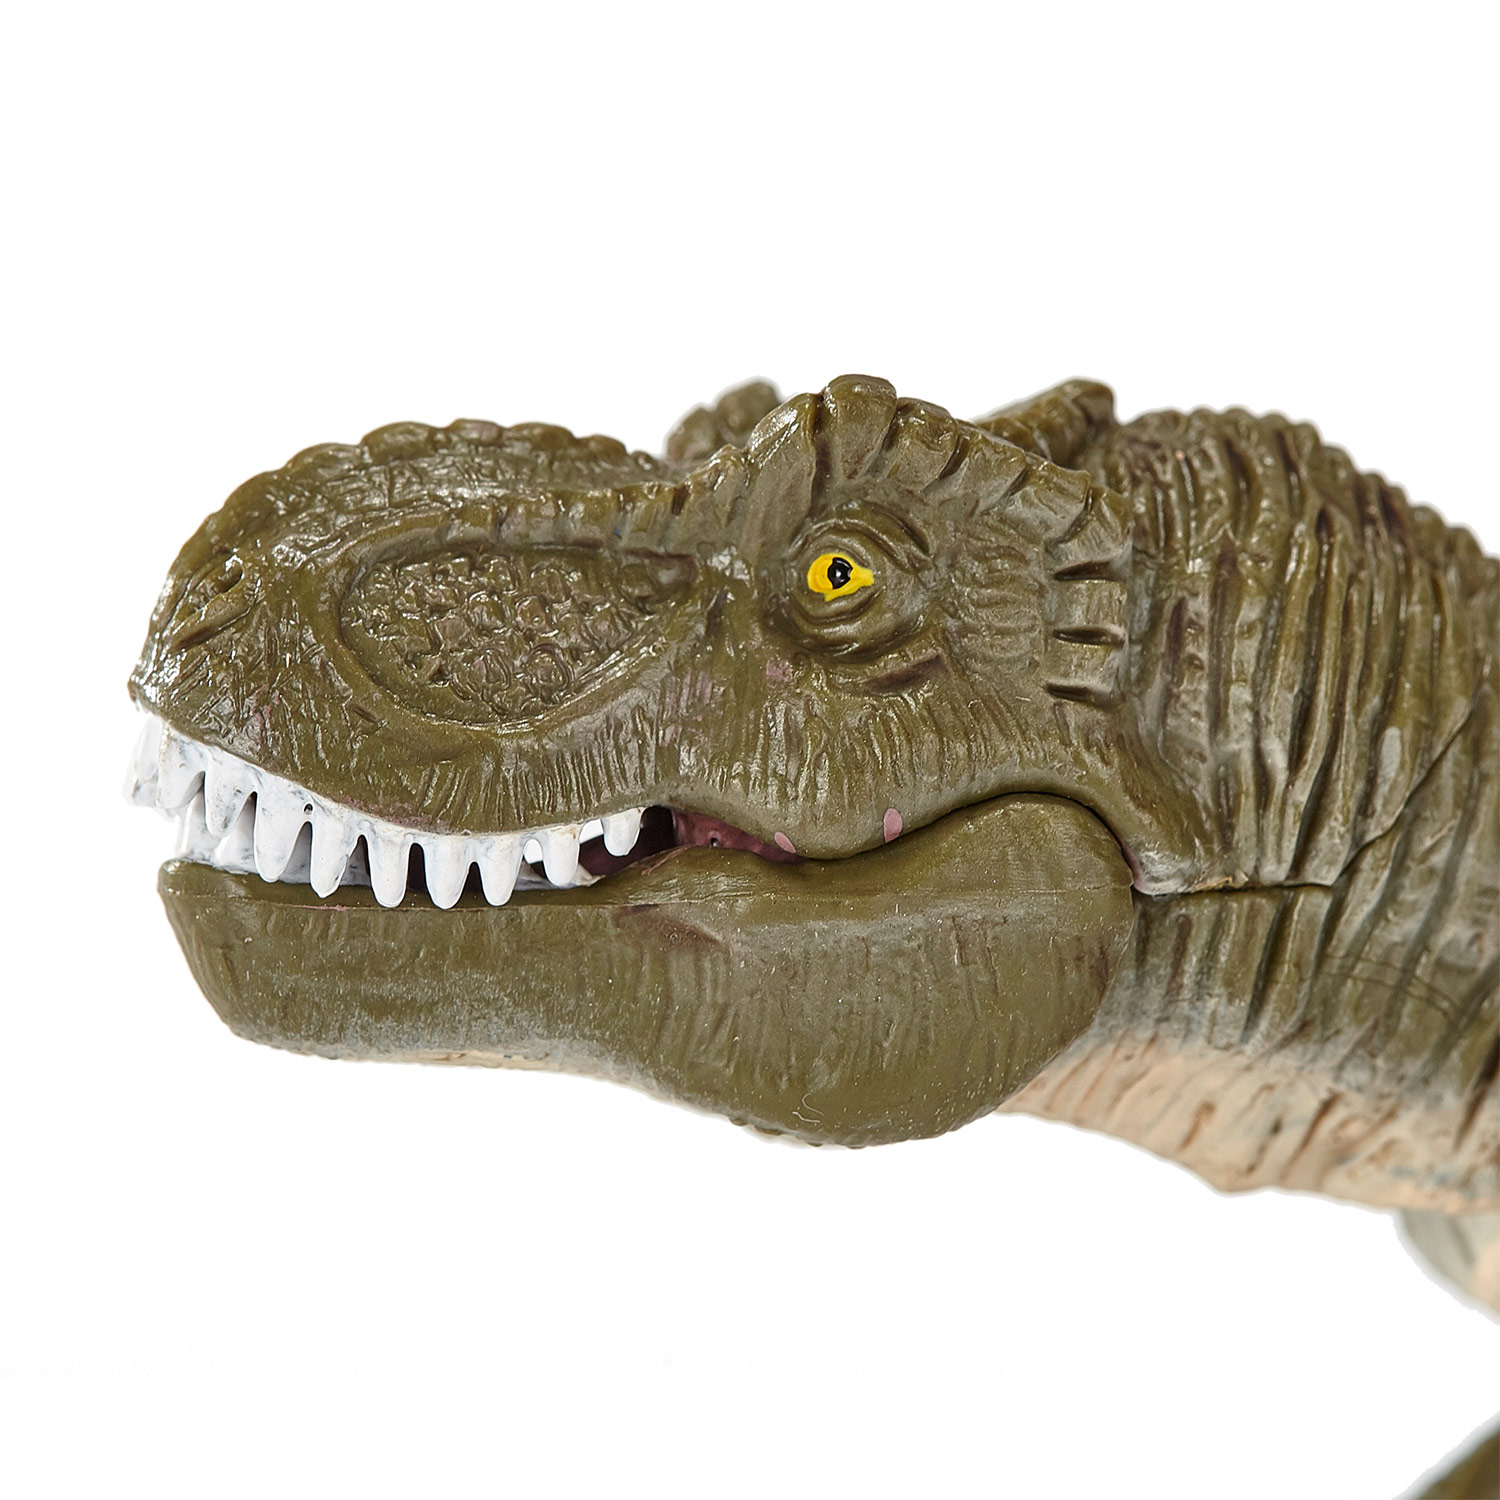 Mojo Prehistory T-Rex avec mâchoire mobile - 387258